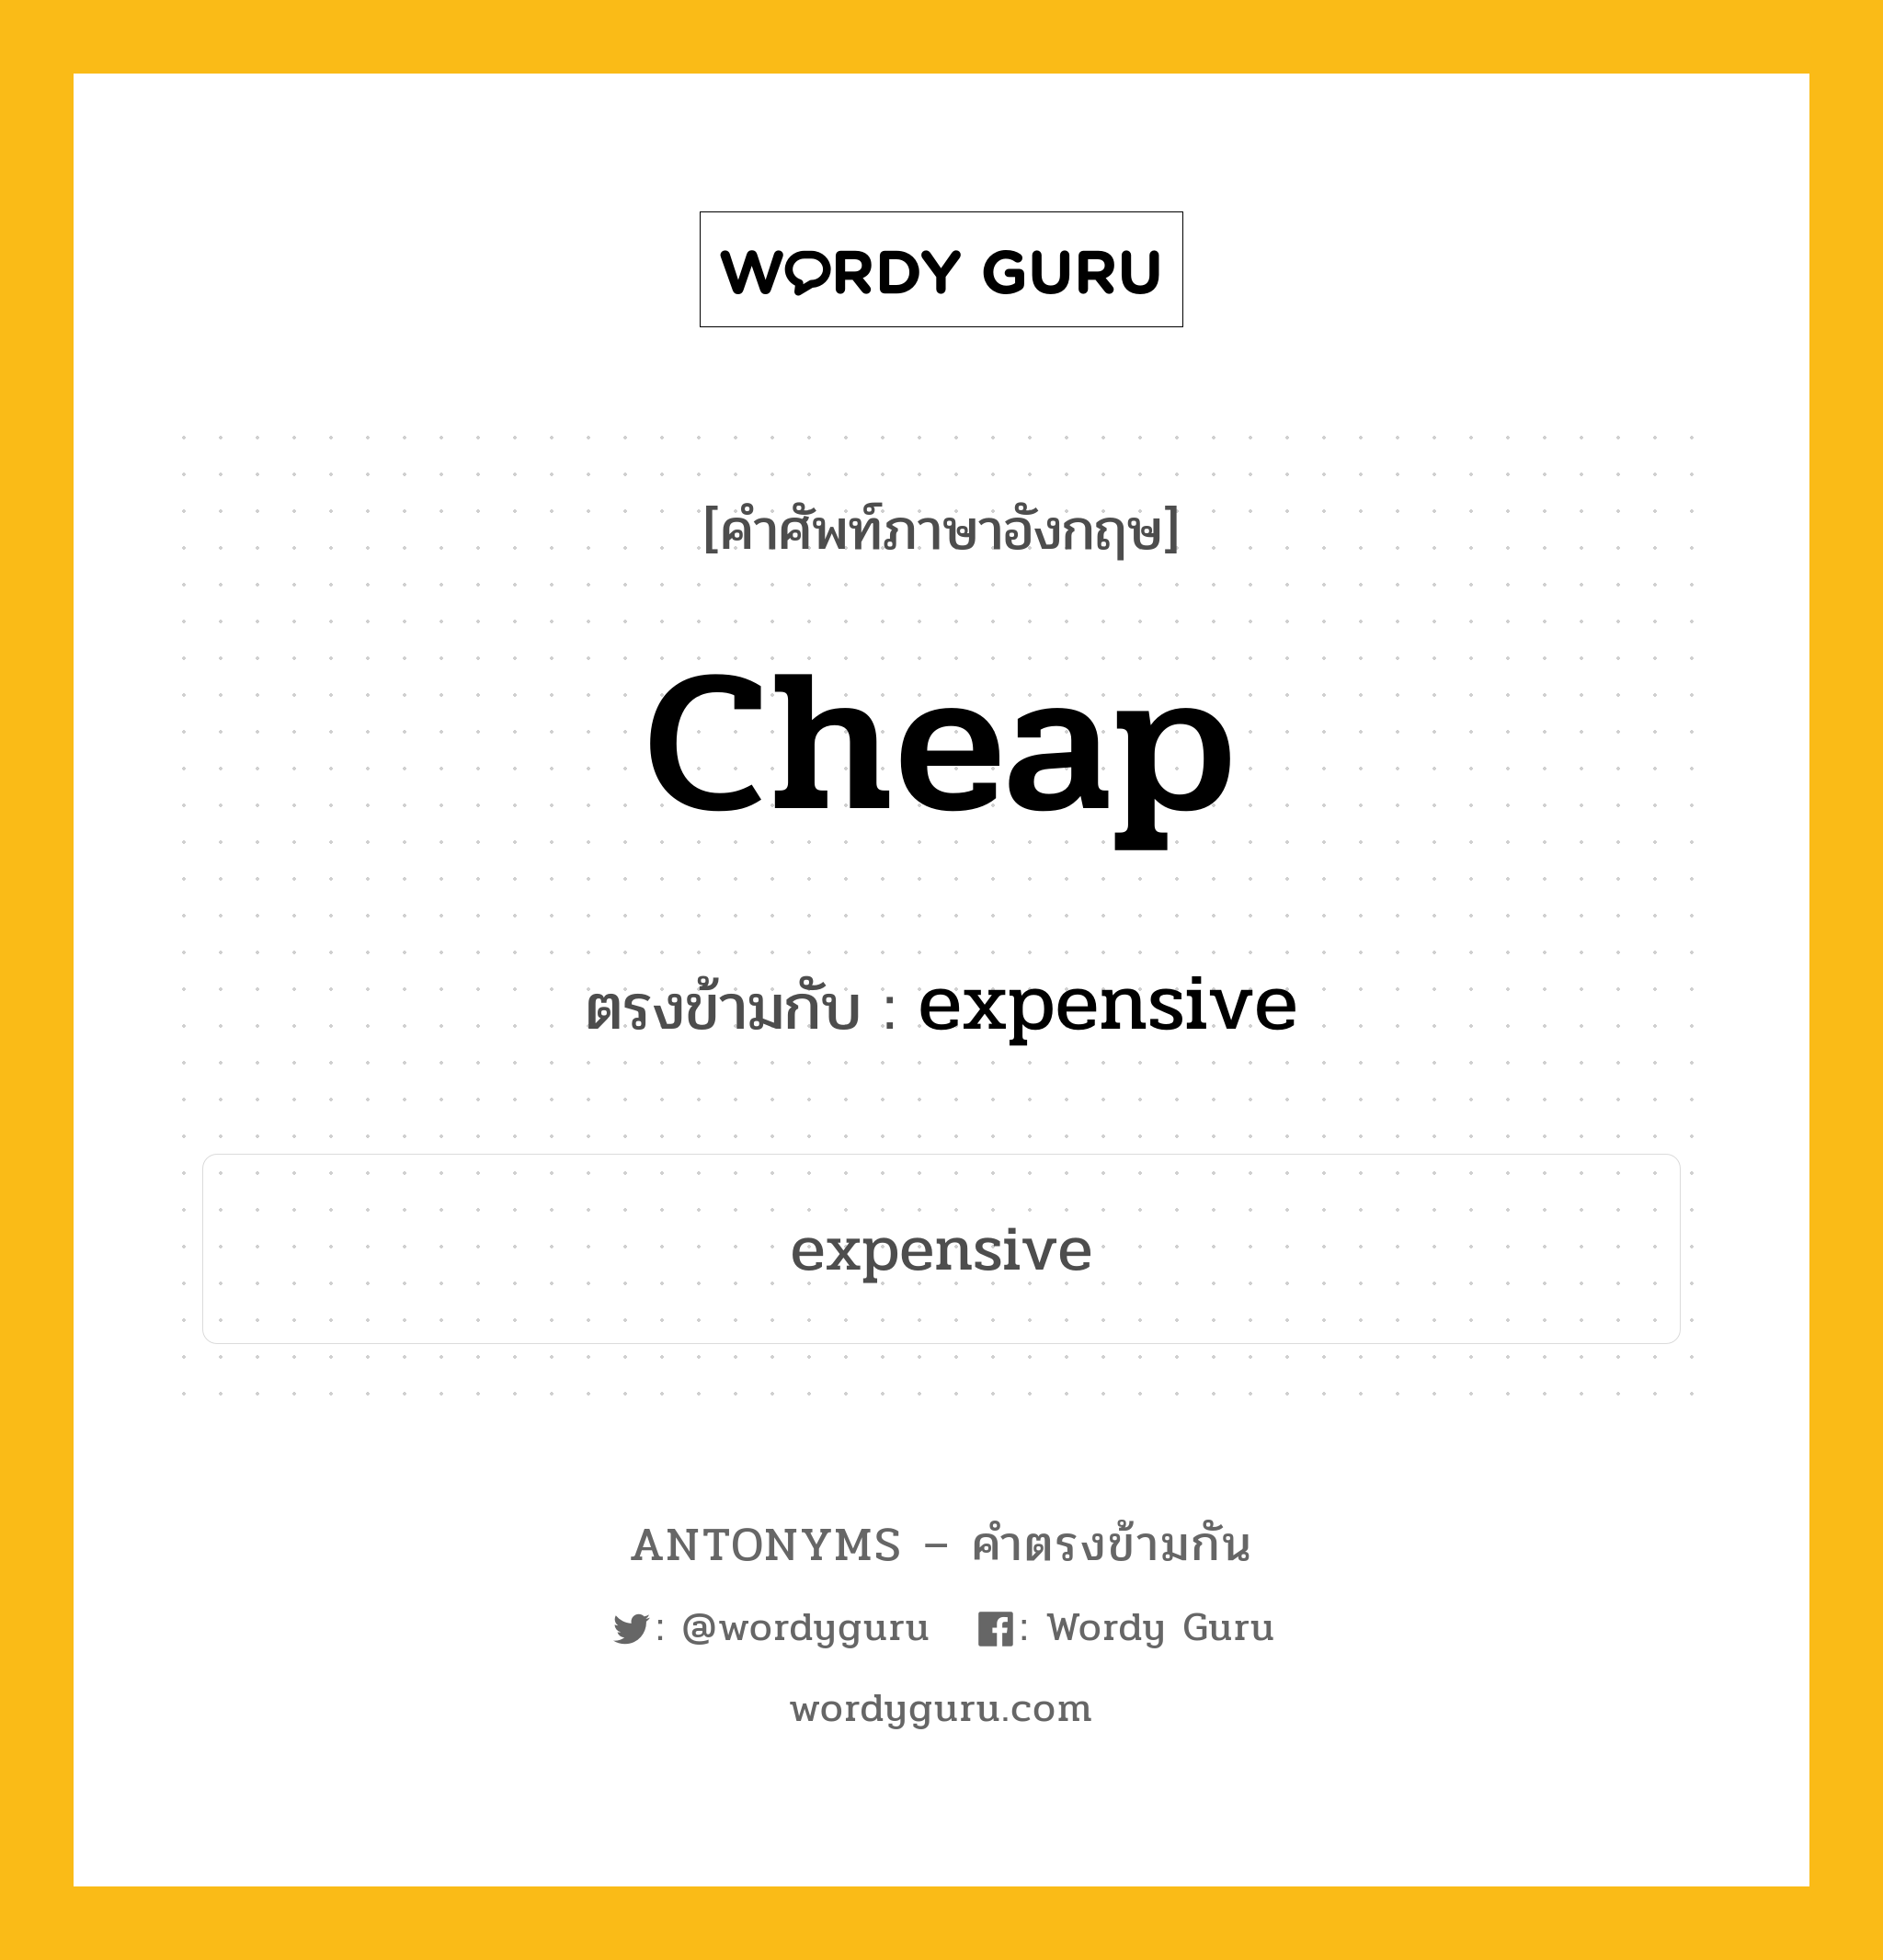 cheap เป็นคำตรงข้ามกับคำไหนบ้าง?, คำศัพท์ภาษาอังกฤษ cheap ตรงข้ามกับ expensive หมวด expensive